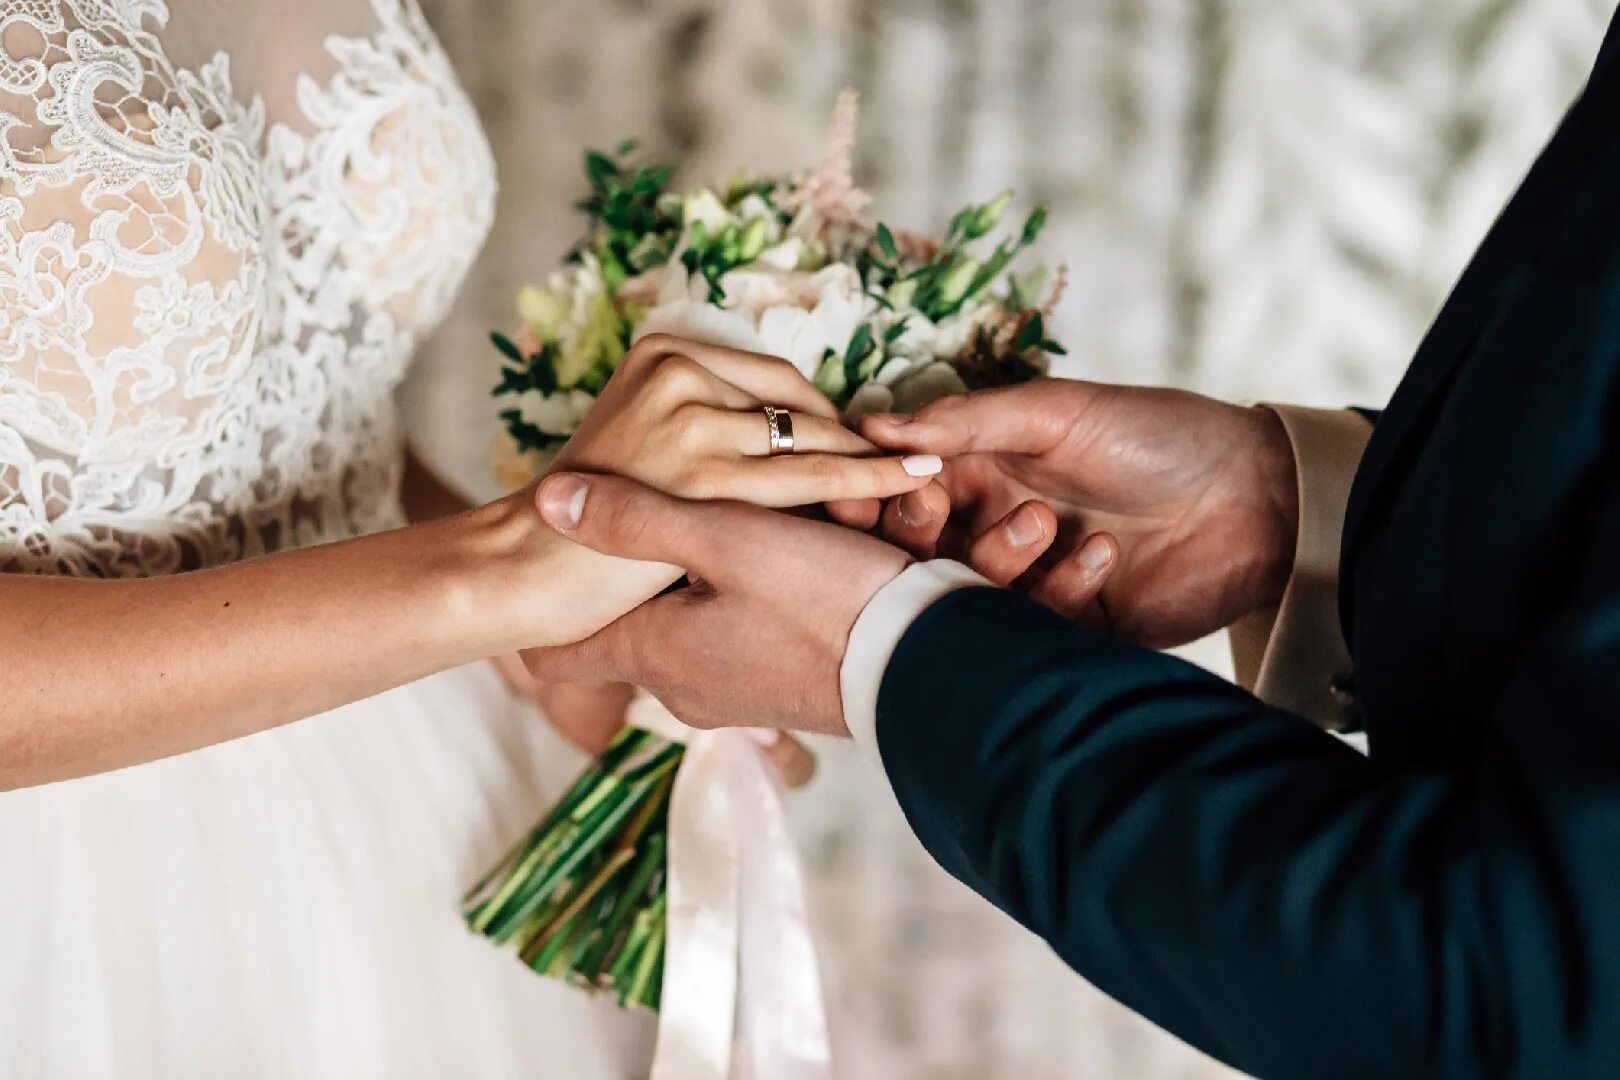 Жених и невеста. Бракосочетание. Кольца жениха и невесты. Обручальные кольца жених и невеста.